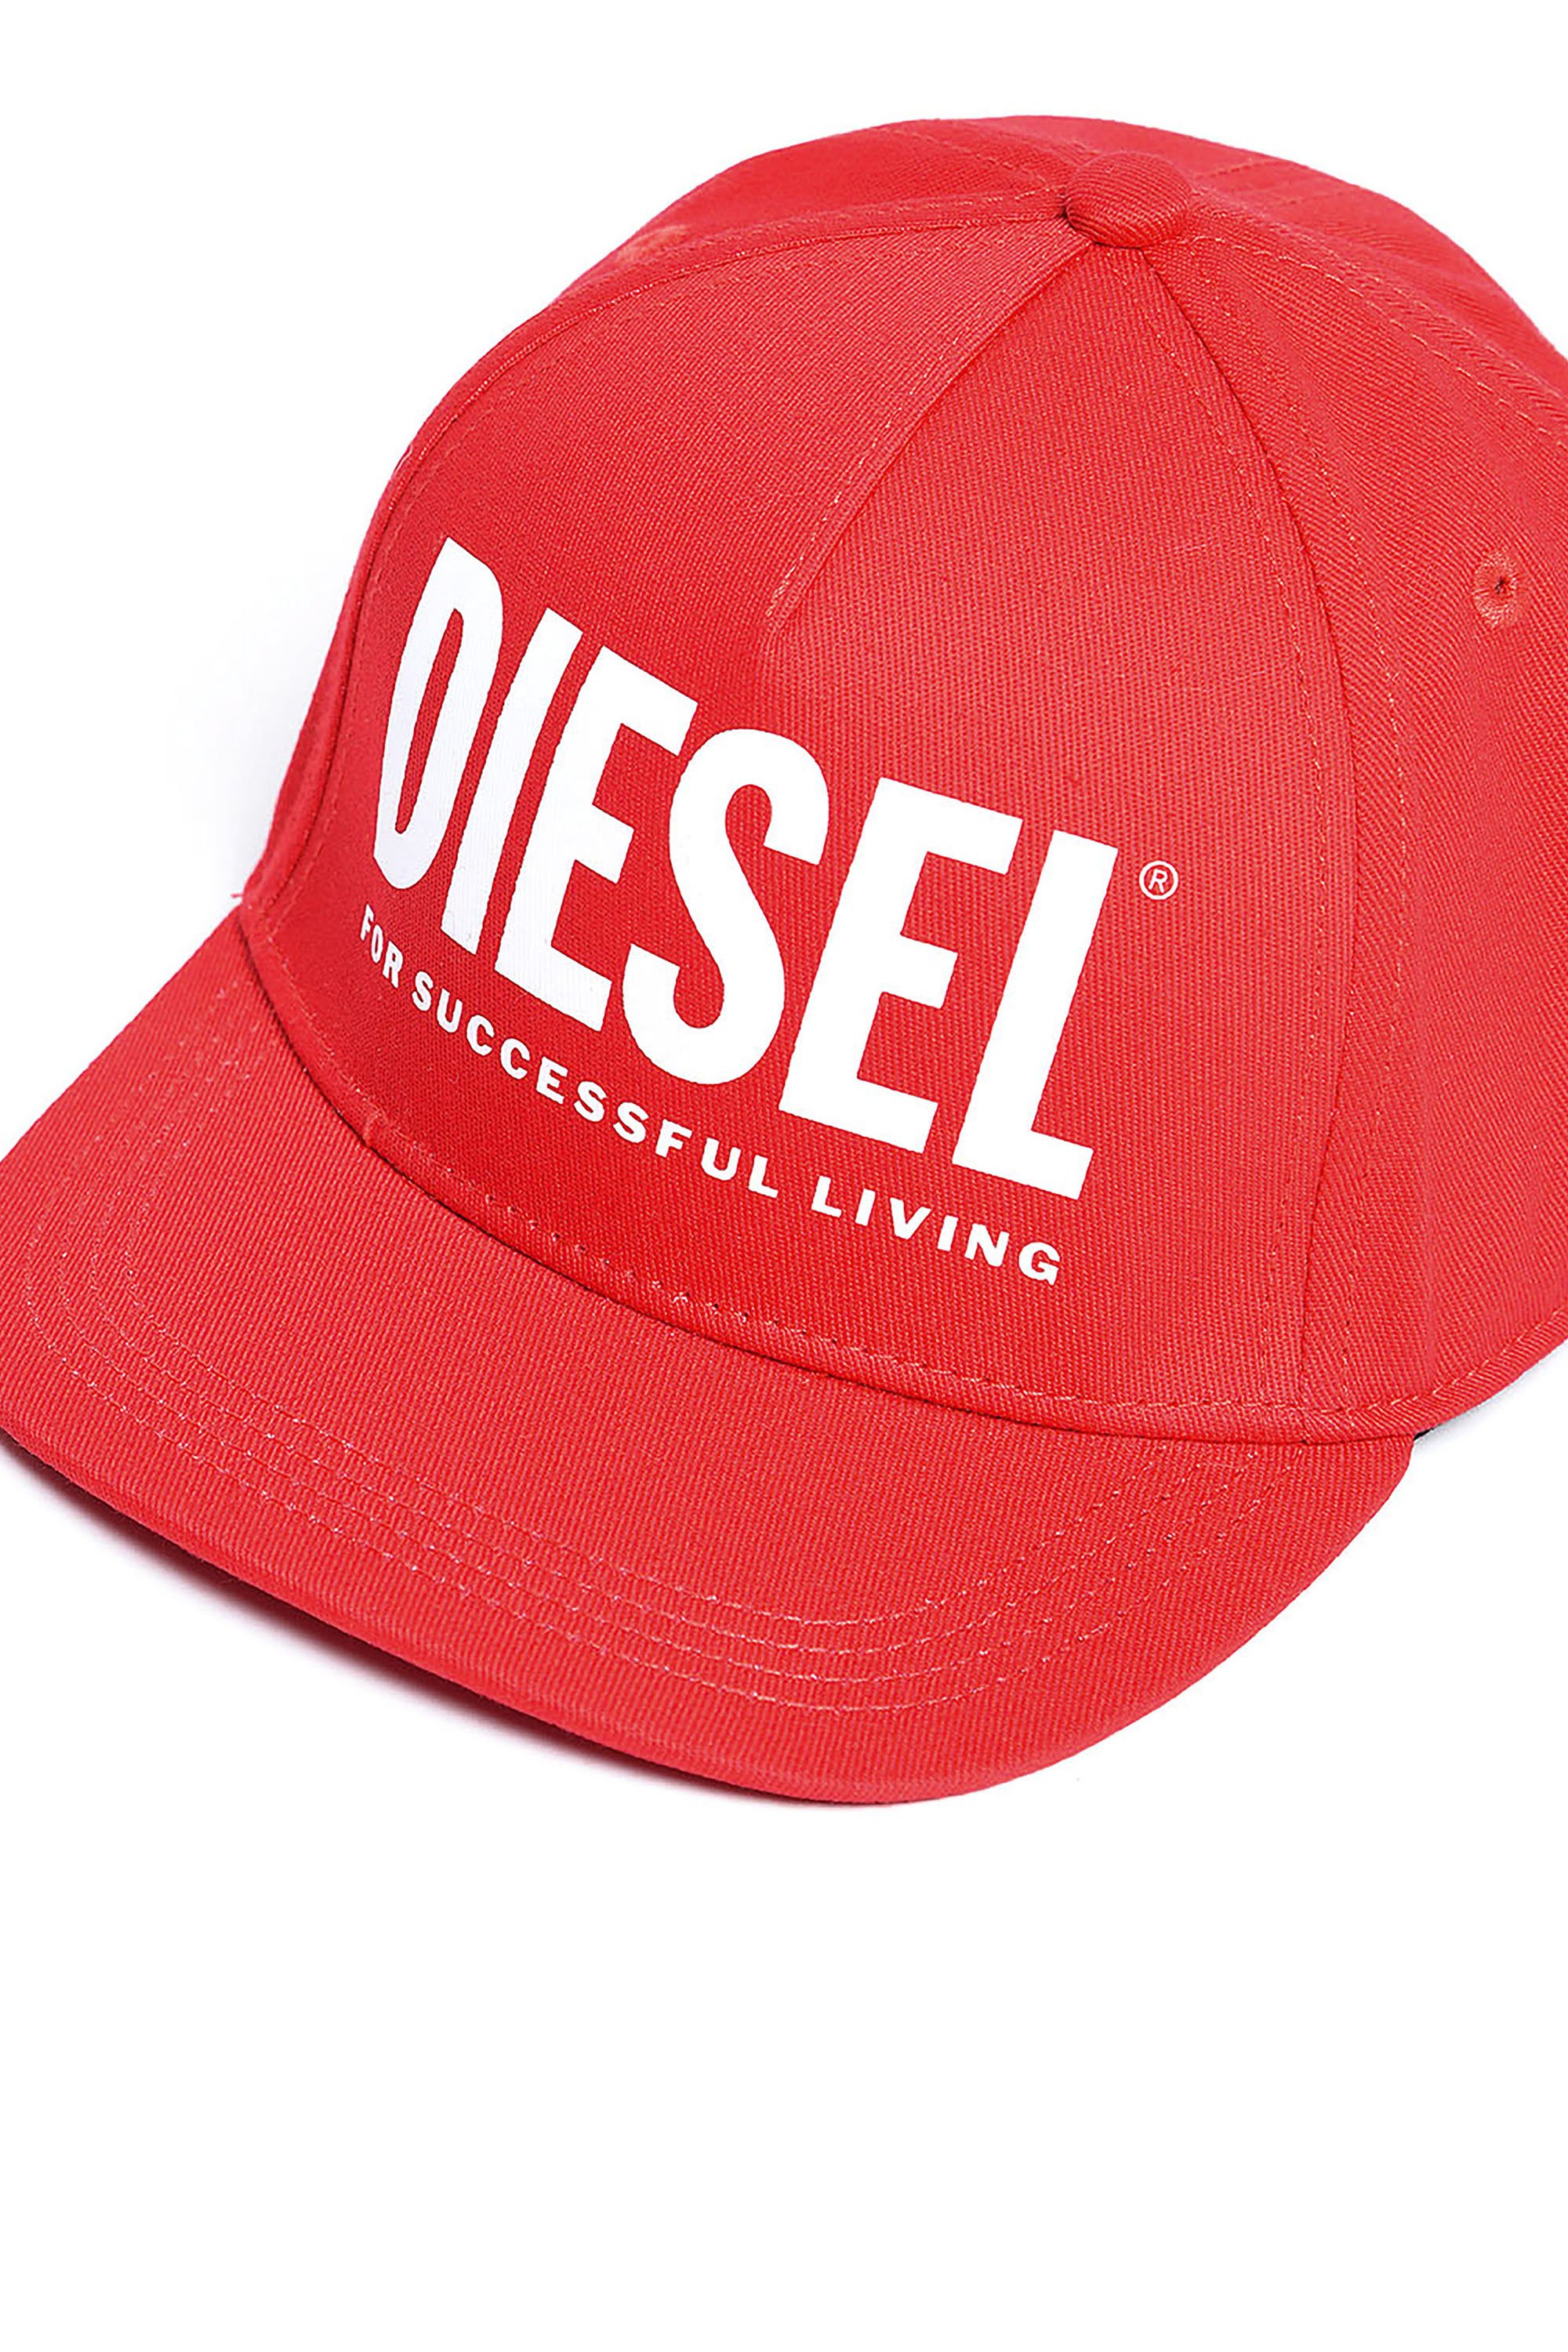 Diesel - FOLLY, Red - Image 3